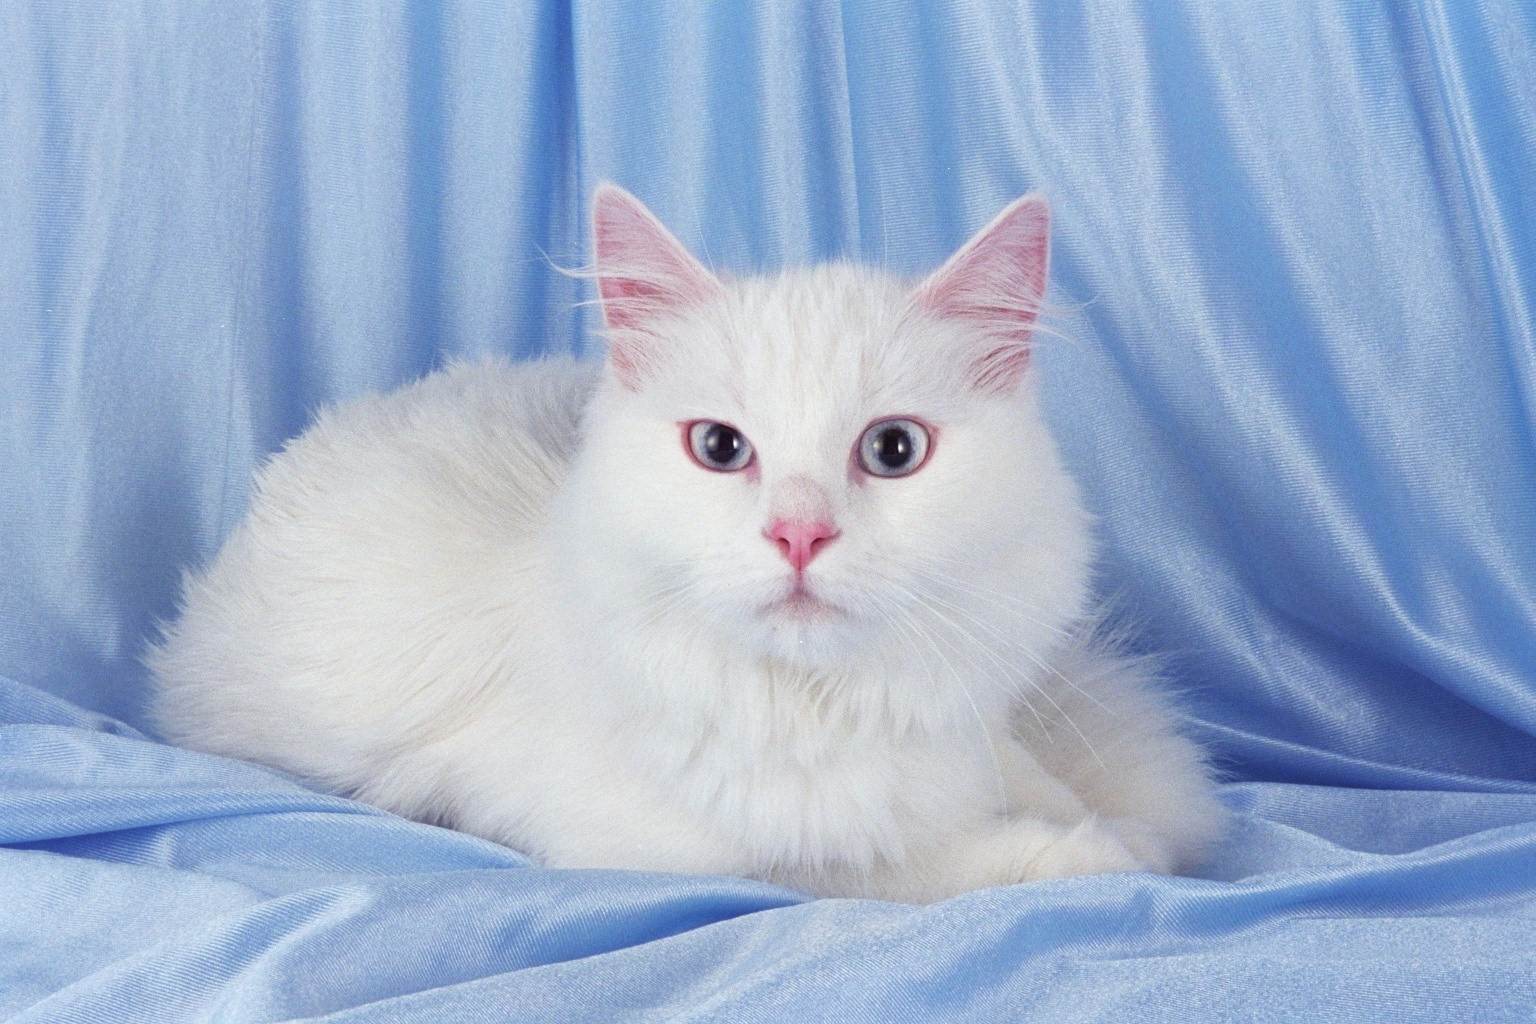 Турецкая ангора (ангорская кошка): фото, описание, окрас, характер, стандарт породы